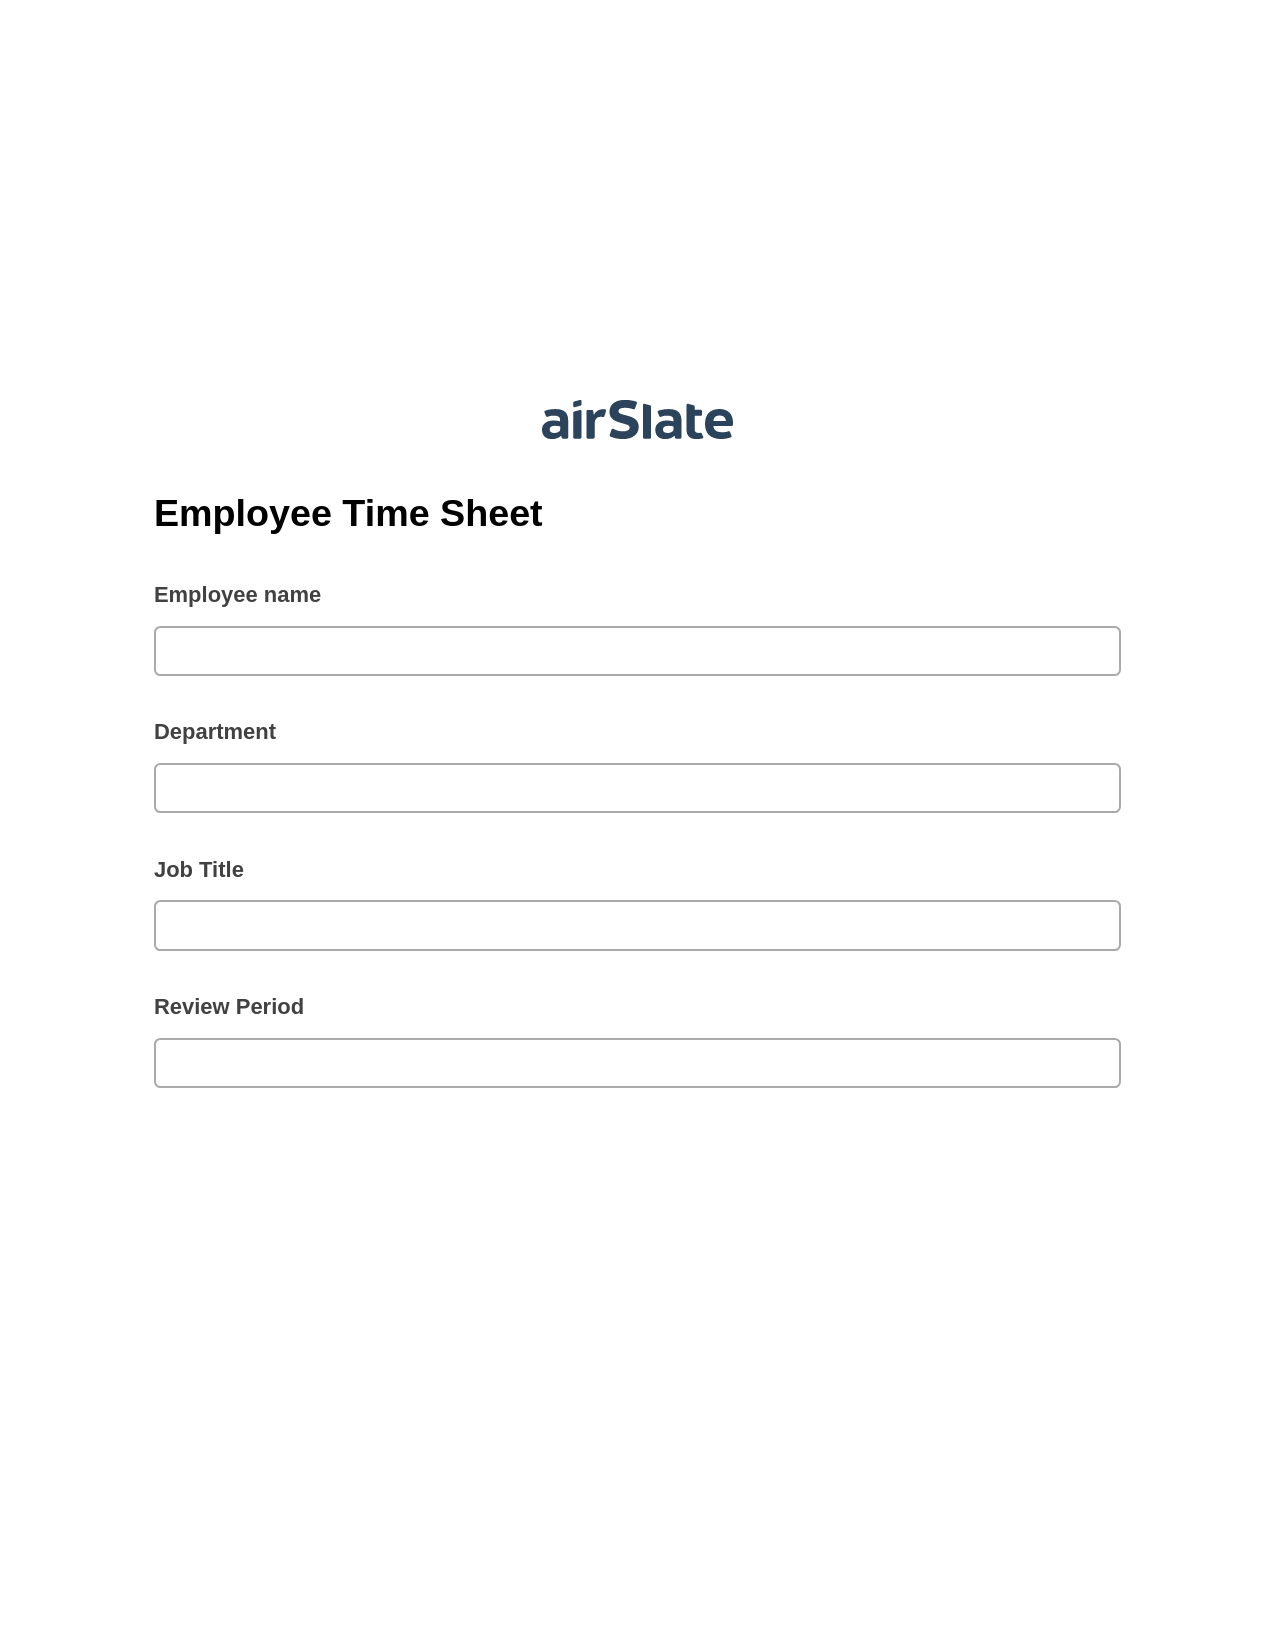 Multirole Employee Time Sheet Pre-fill from Google Sheets Bot, Create Salesforce Records Bot, Webhook Postfinish Bot